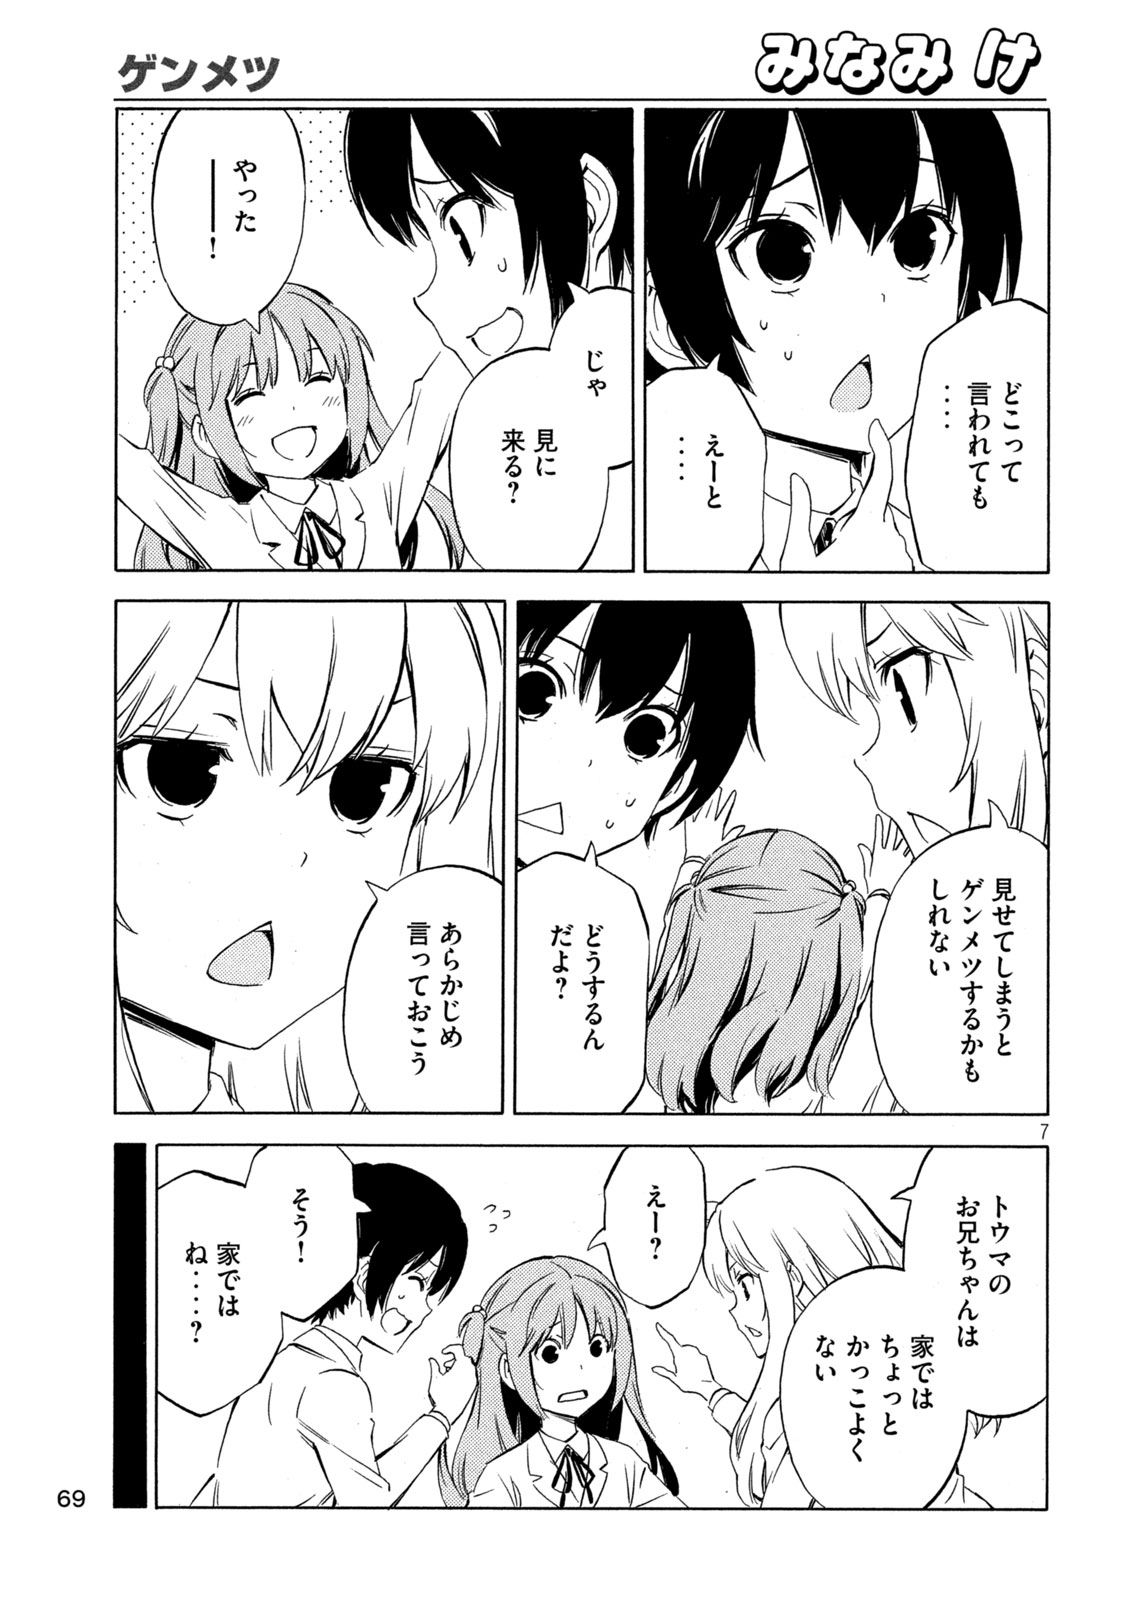 Minami-ke - Chapter 484 - Page 7